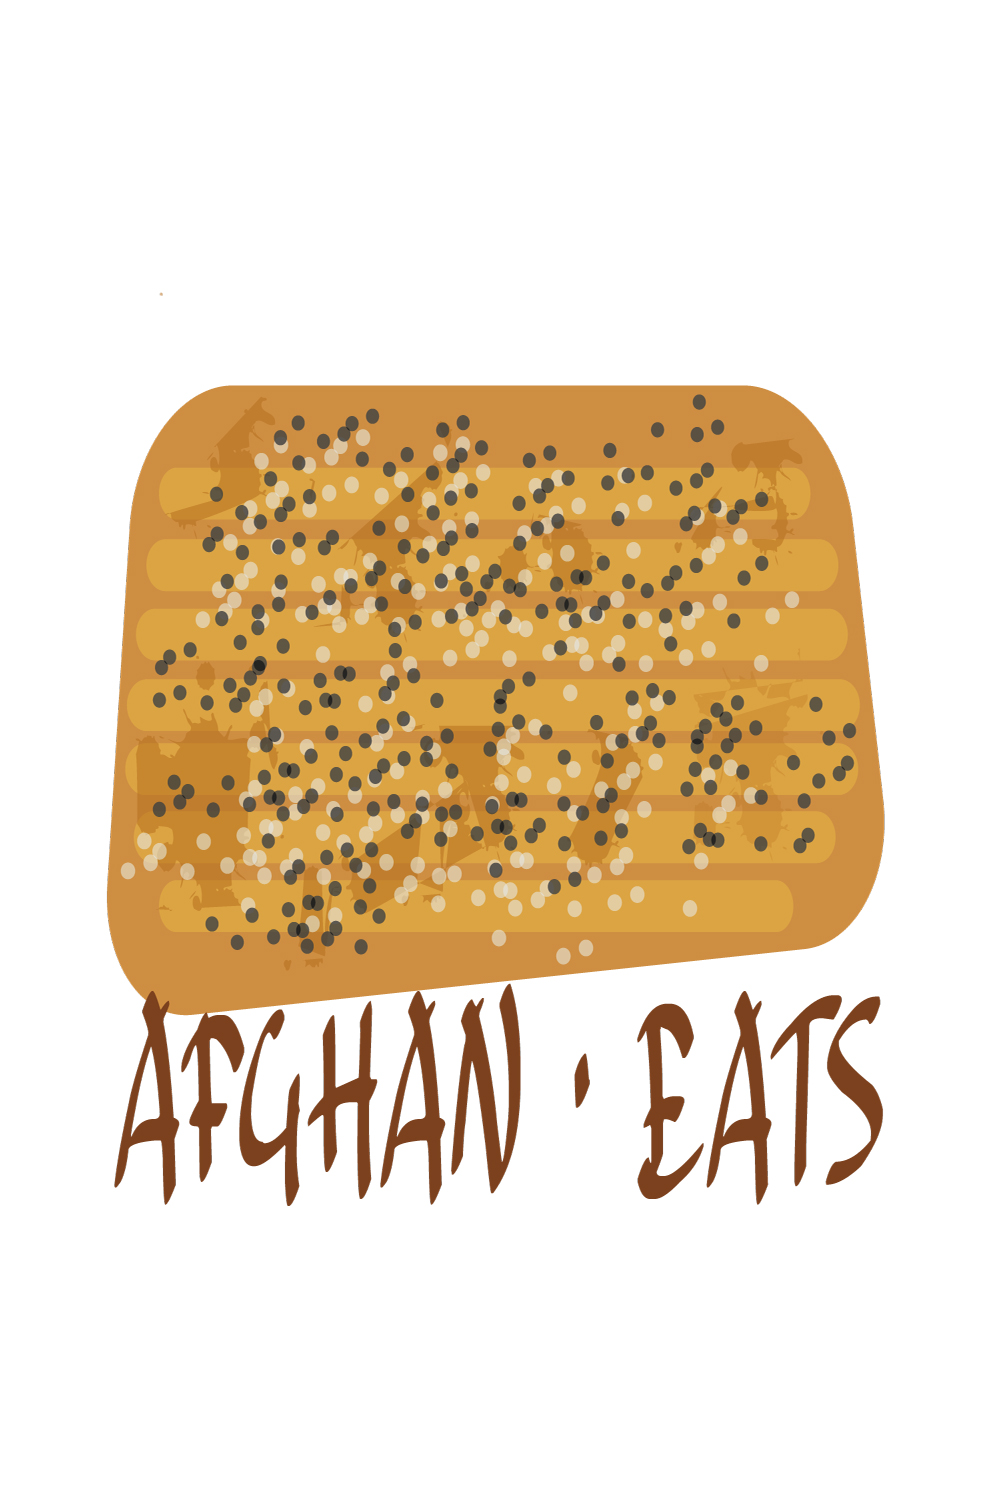 Afghan Eats - TShirt Design pinterest preview image.